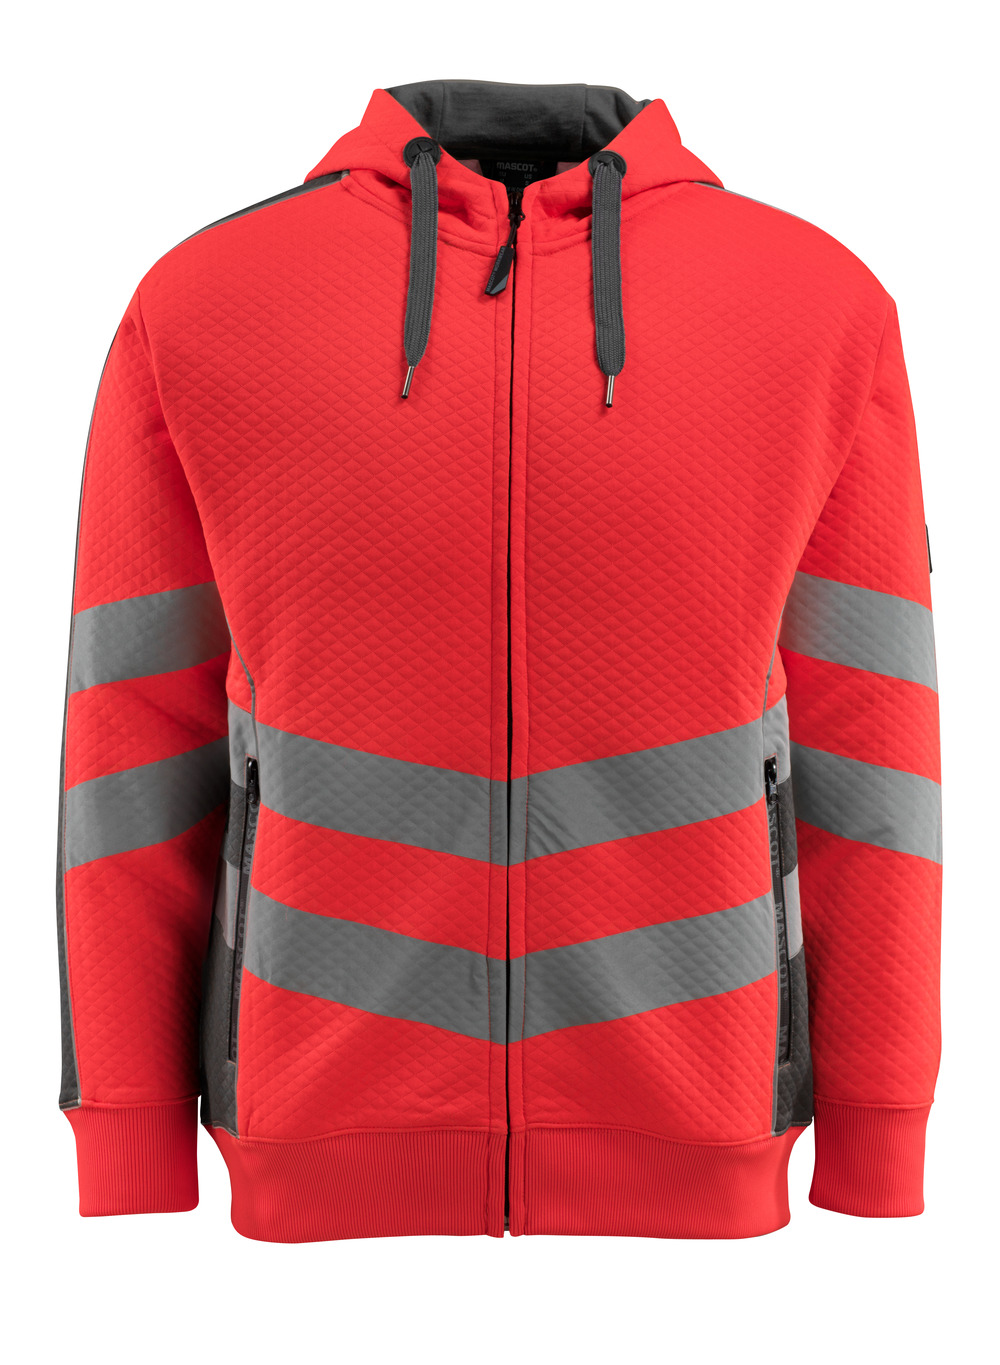 MASCOT-Warnschutz, Warn-Sweatshirt, Corby,  310 g/m², rot/dunkelanthrazit

